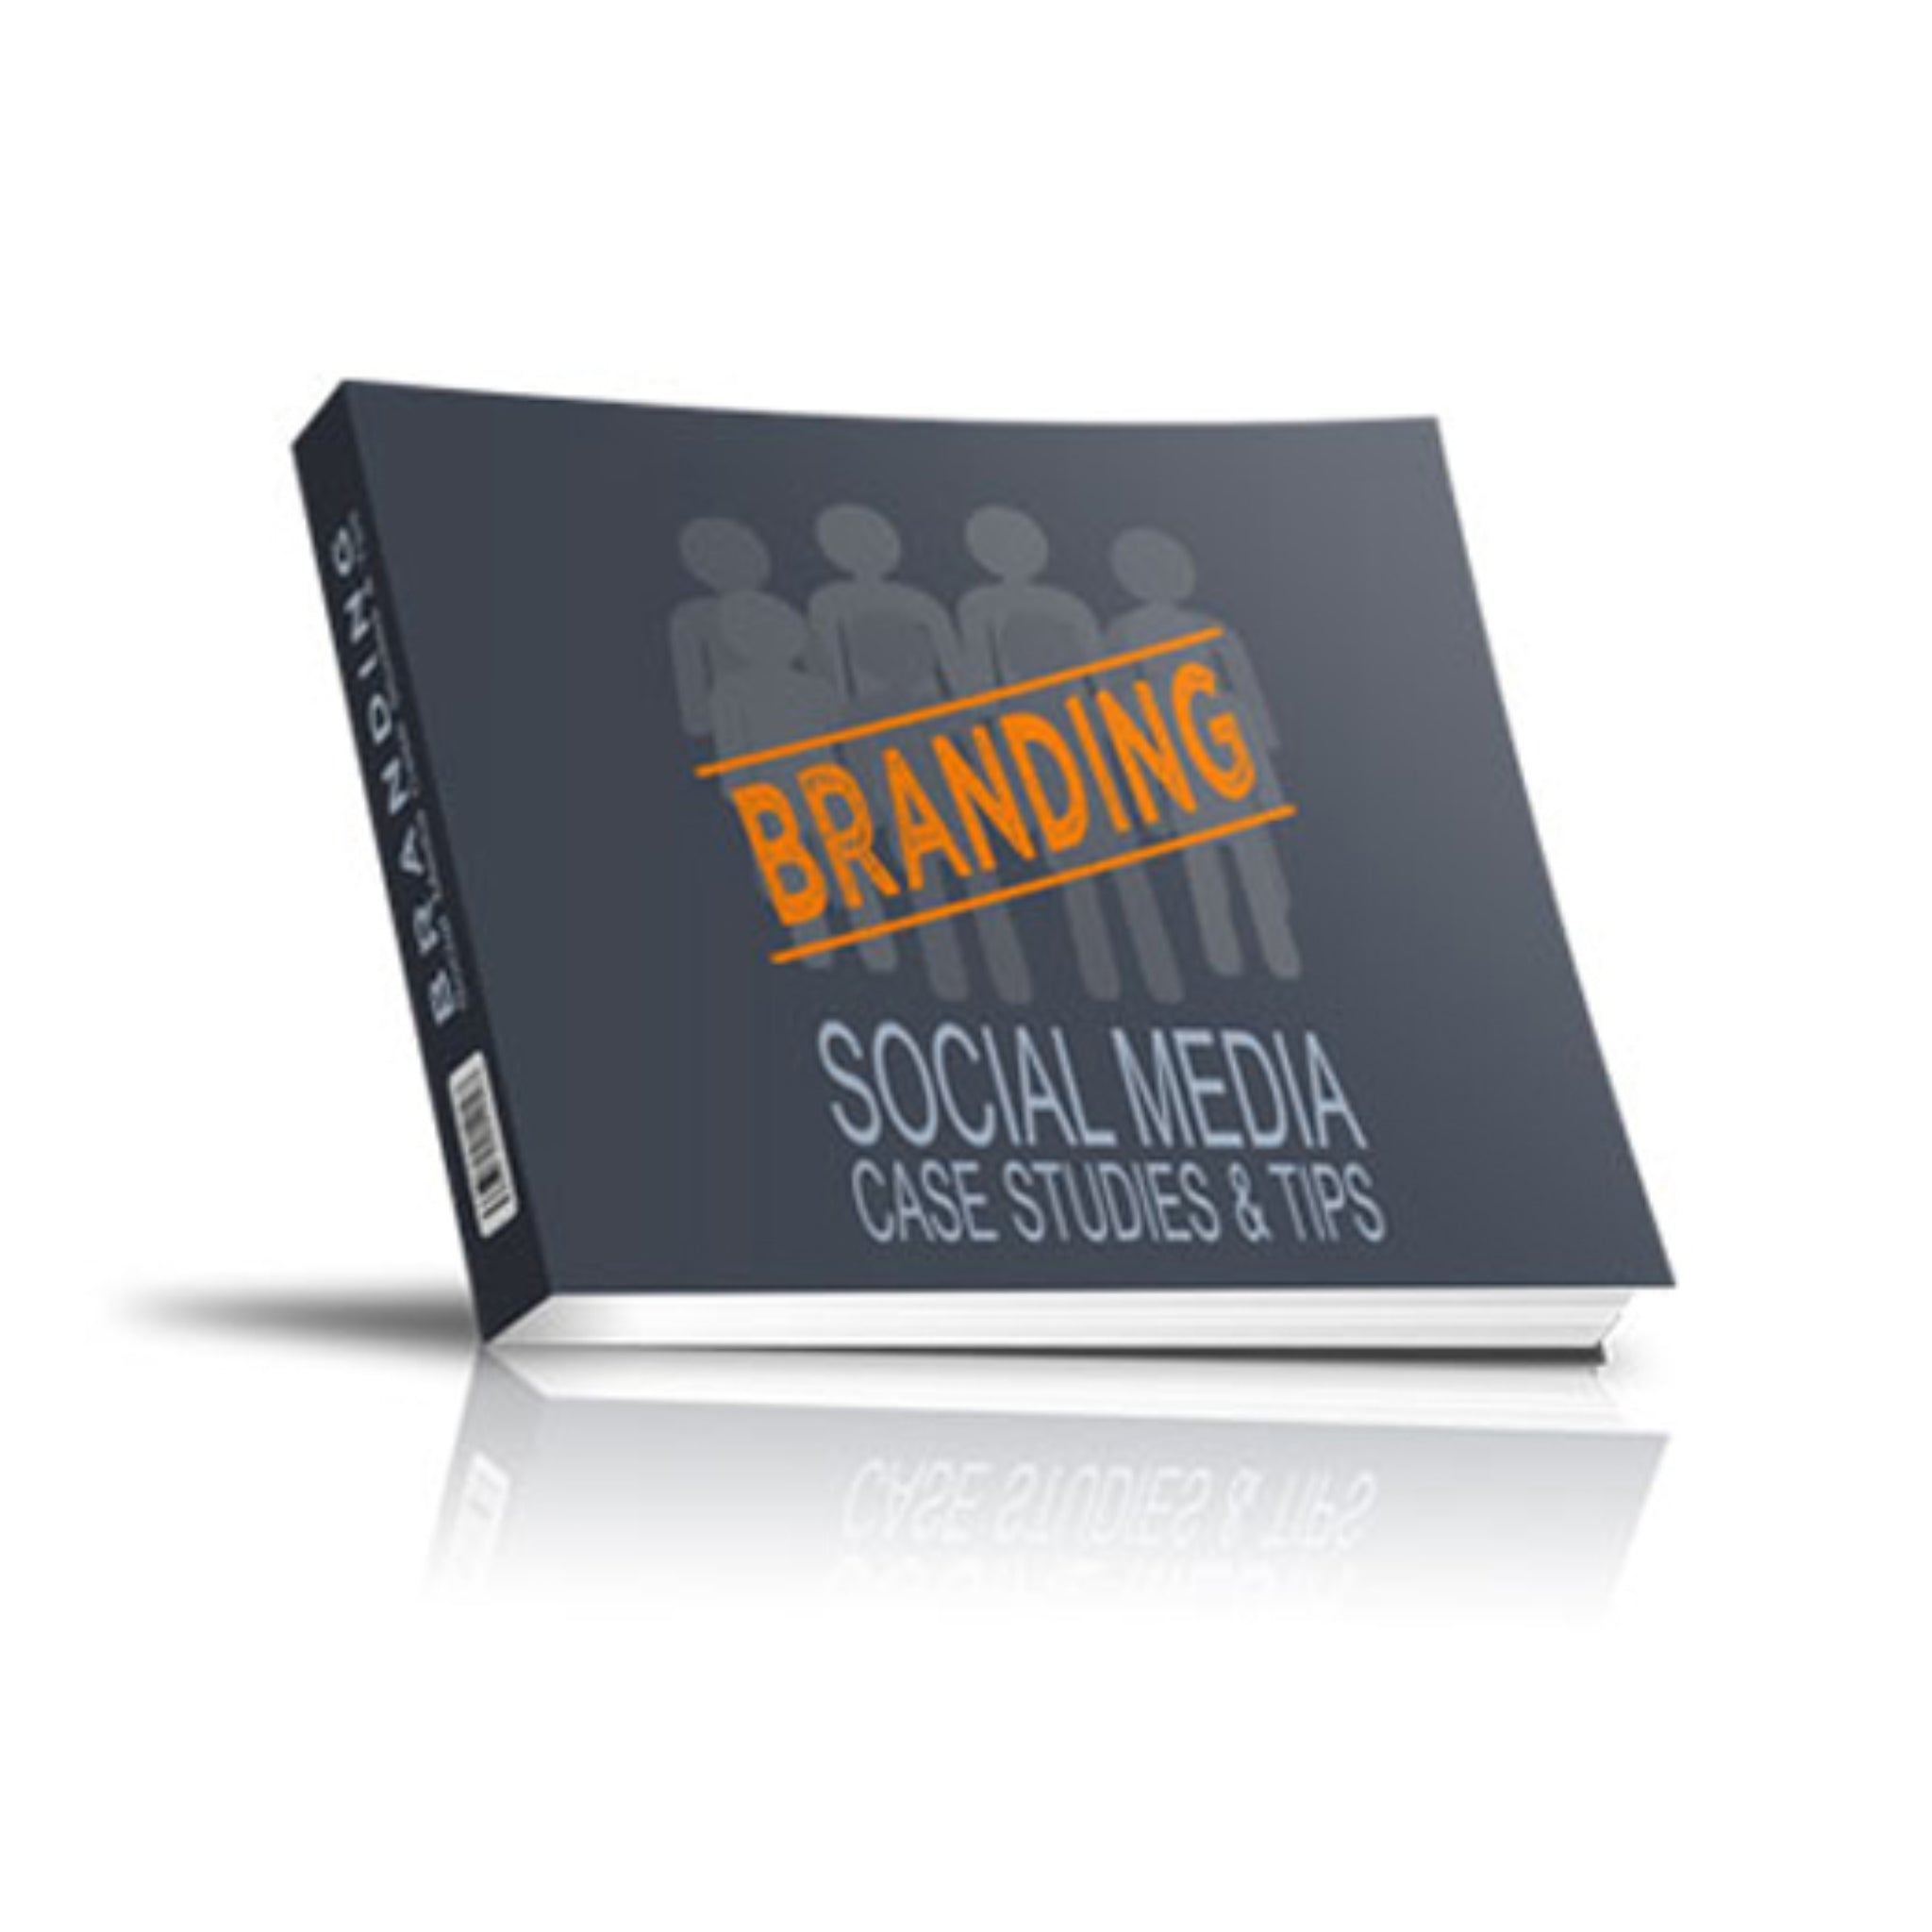 Branding Social Media Case Studies and Tips Ebook